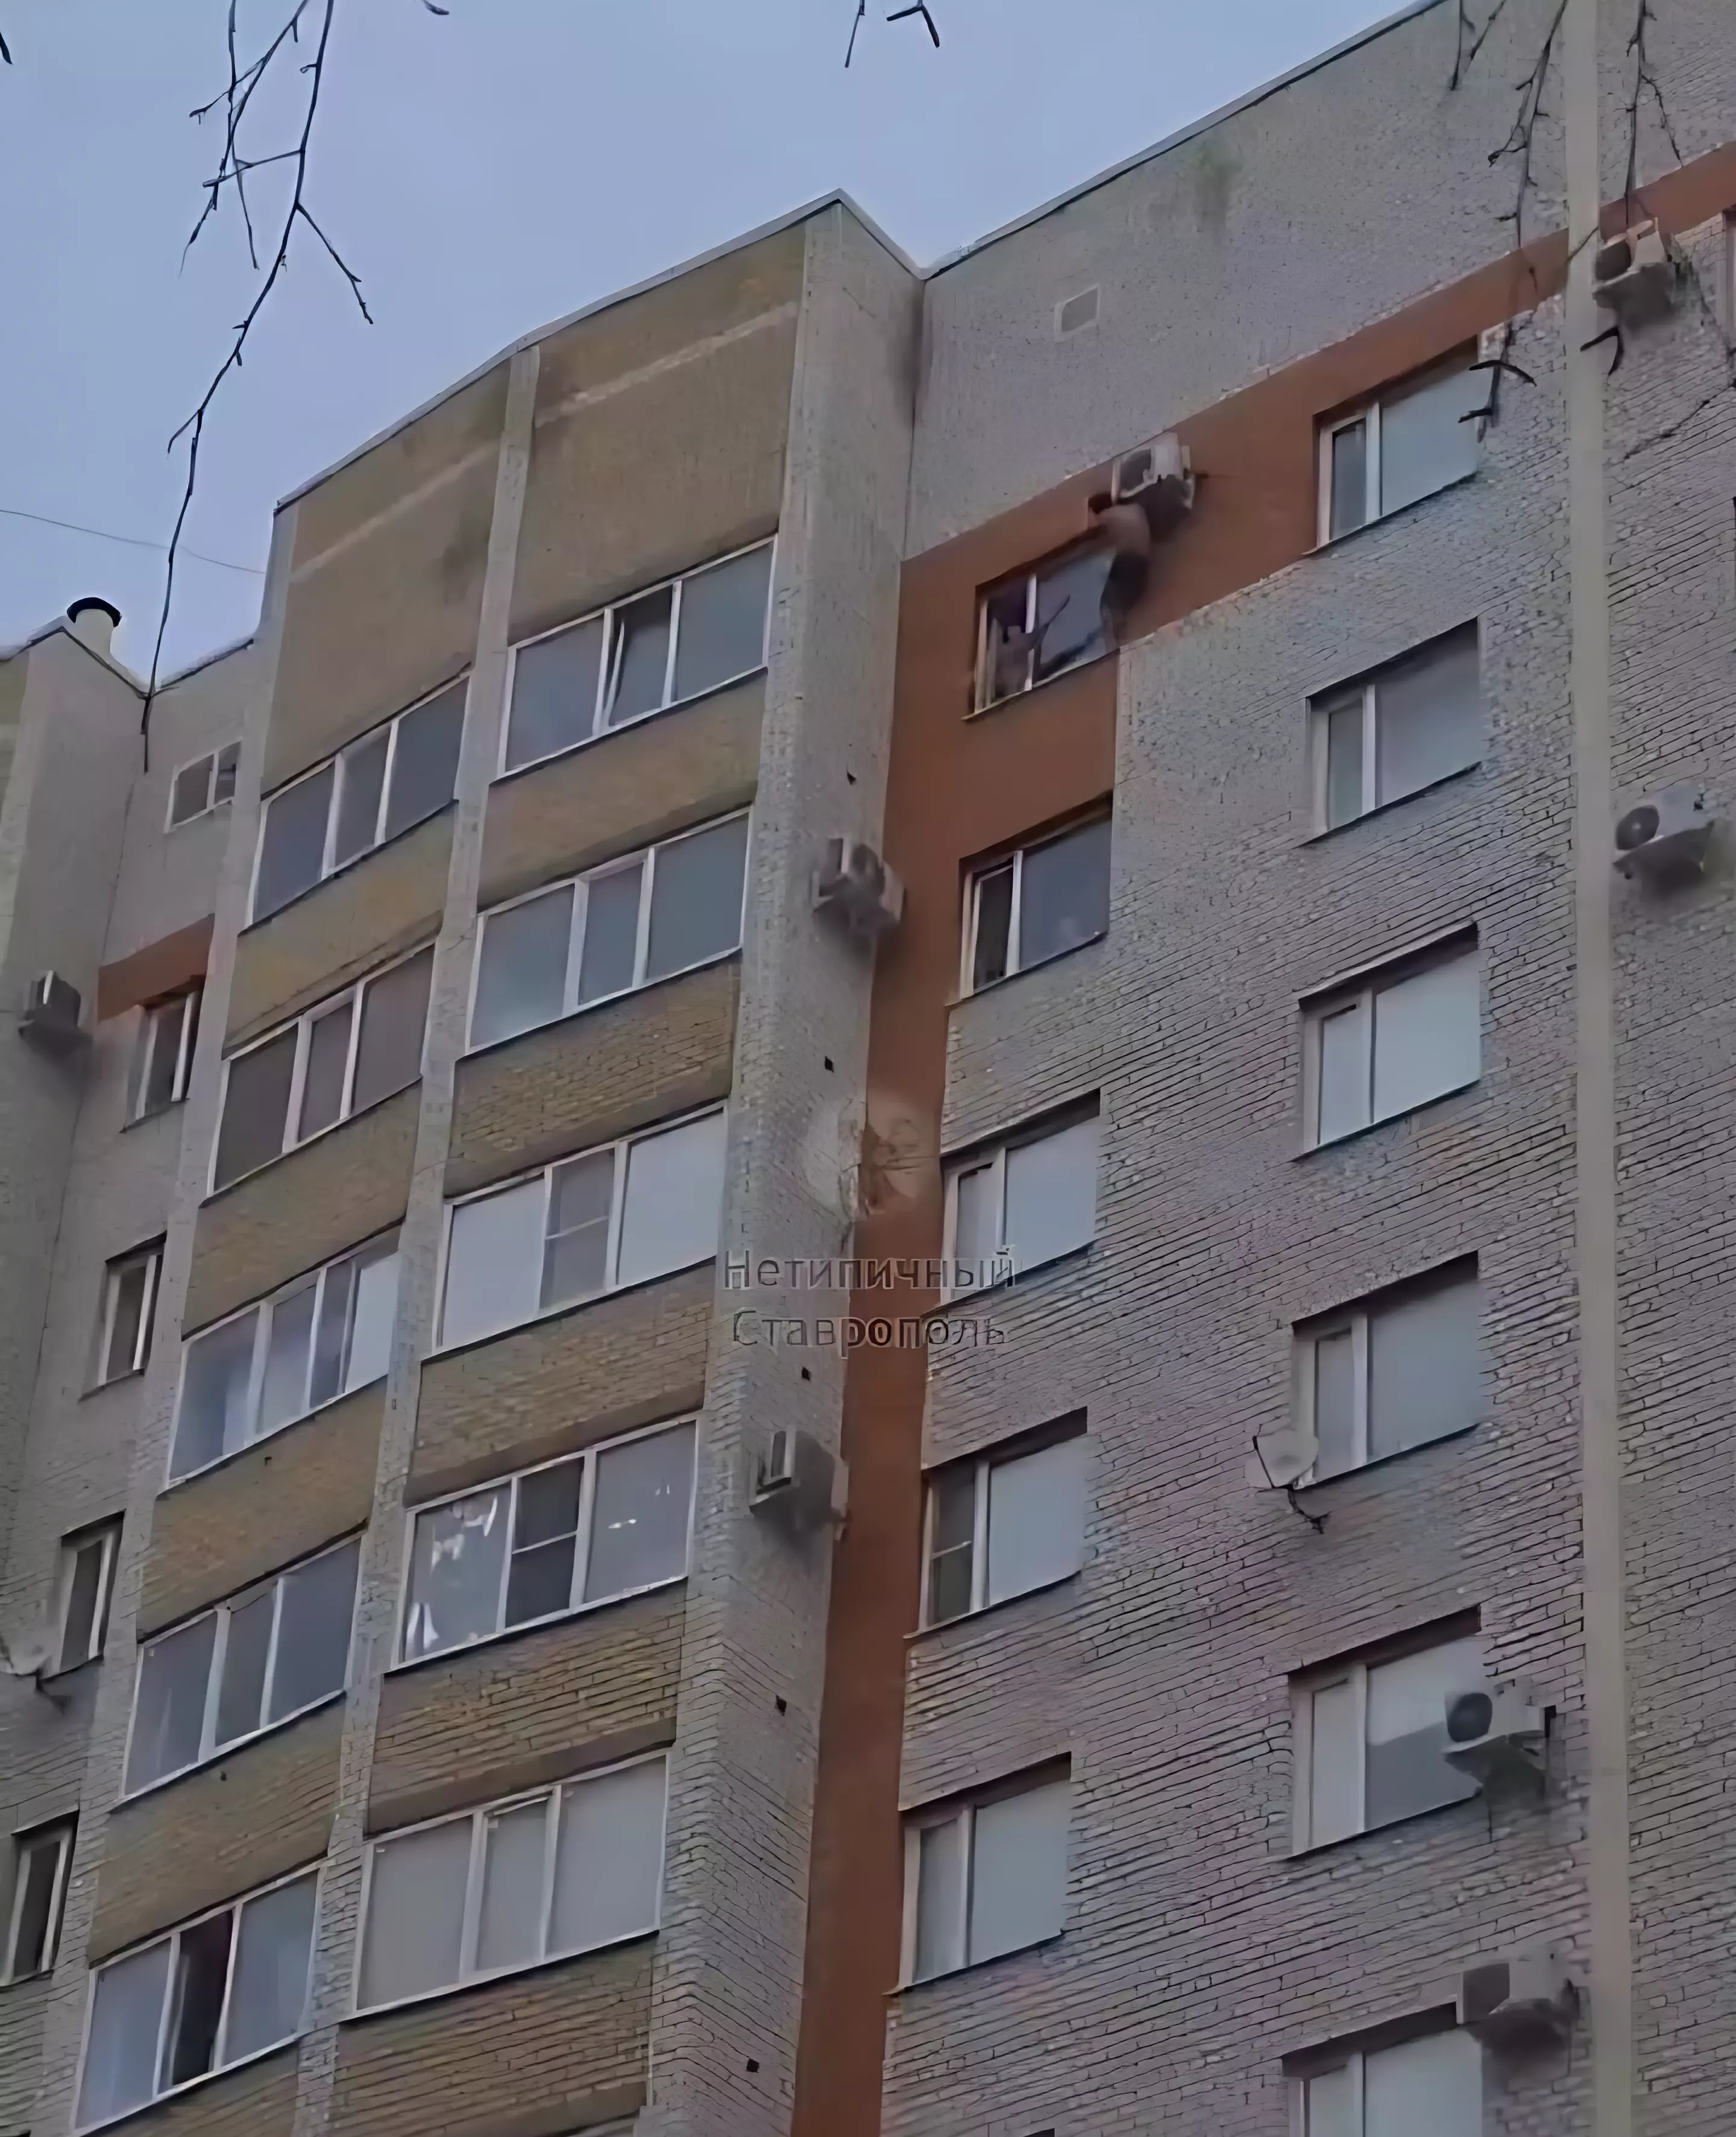 Раздетый мужчина повис на кондиционере за окном многоэтажки в Ставрополе0